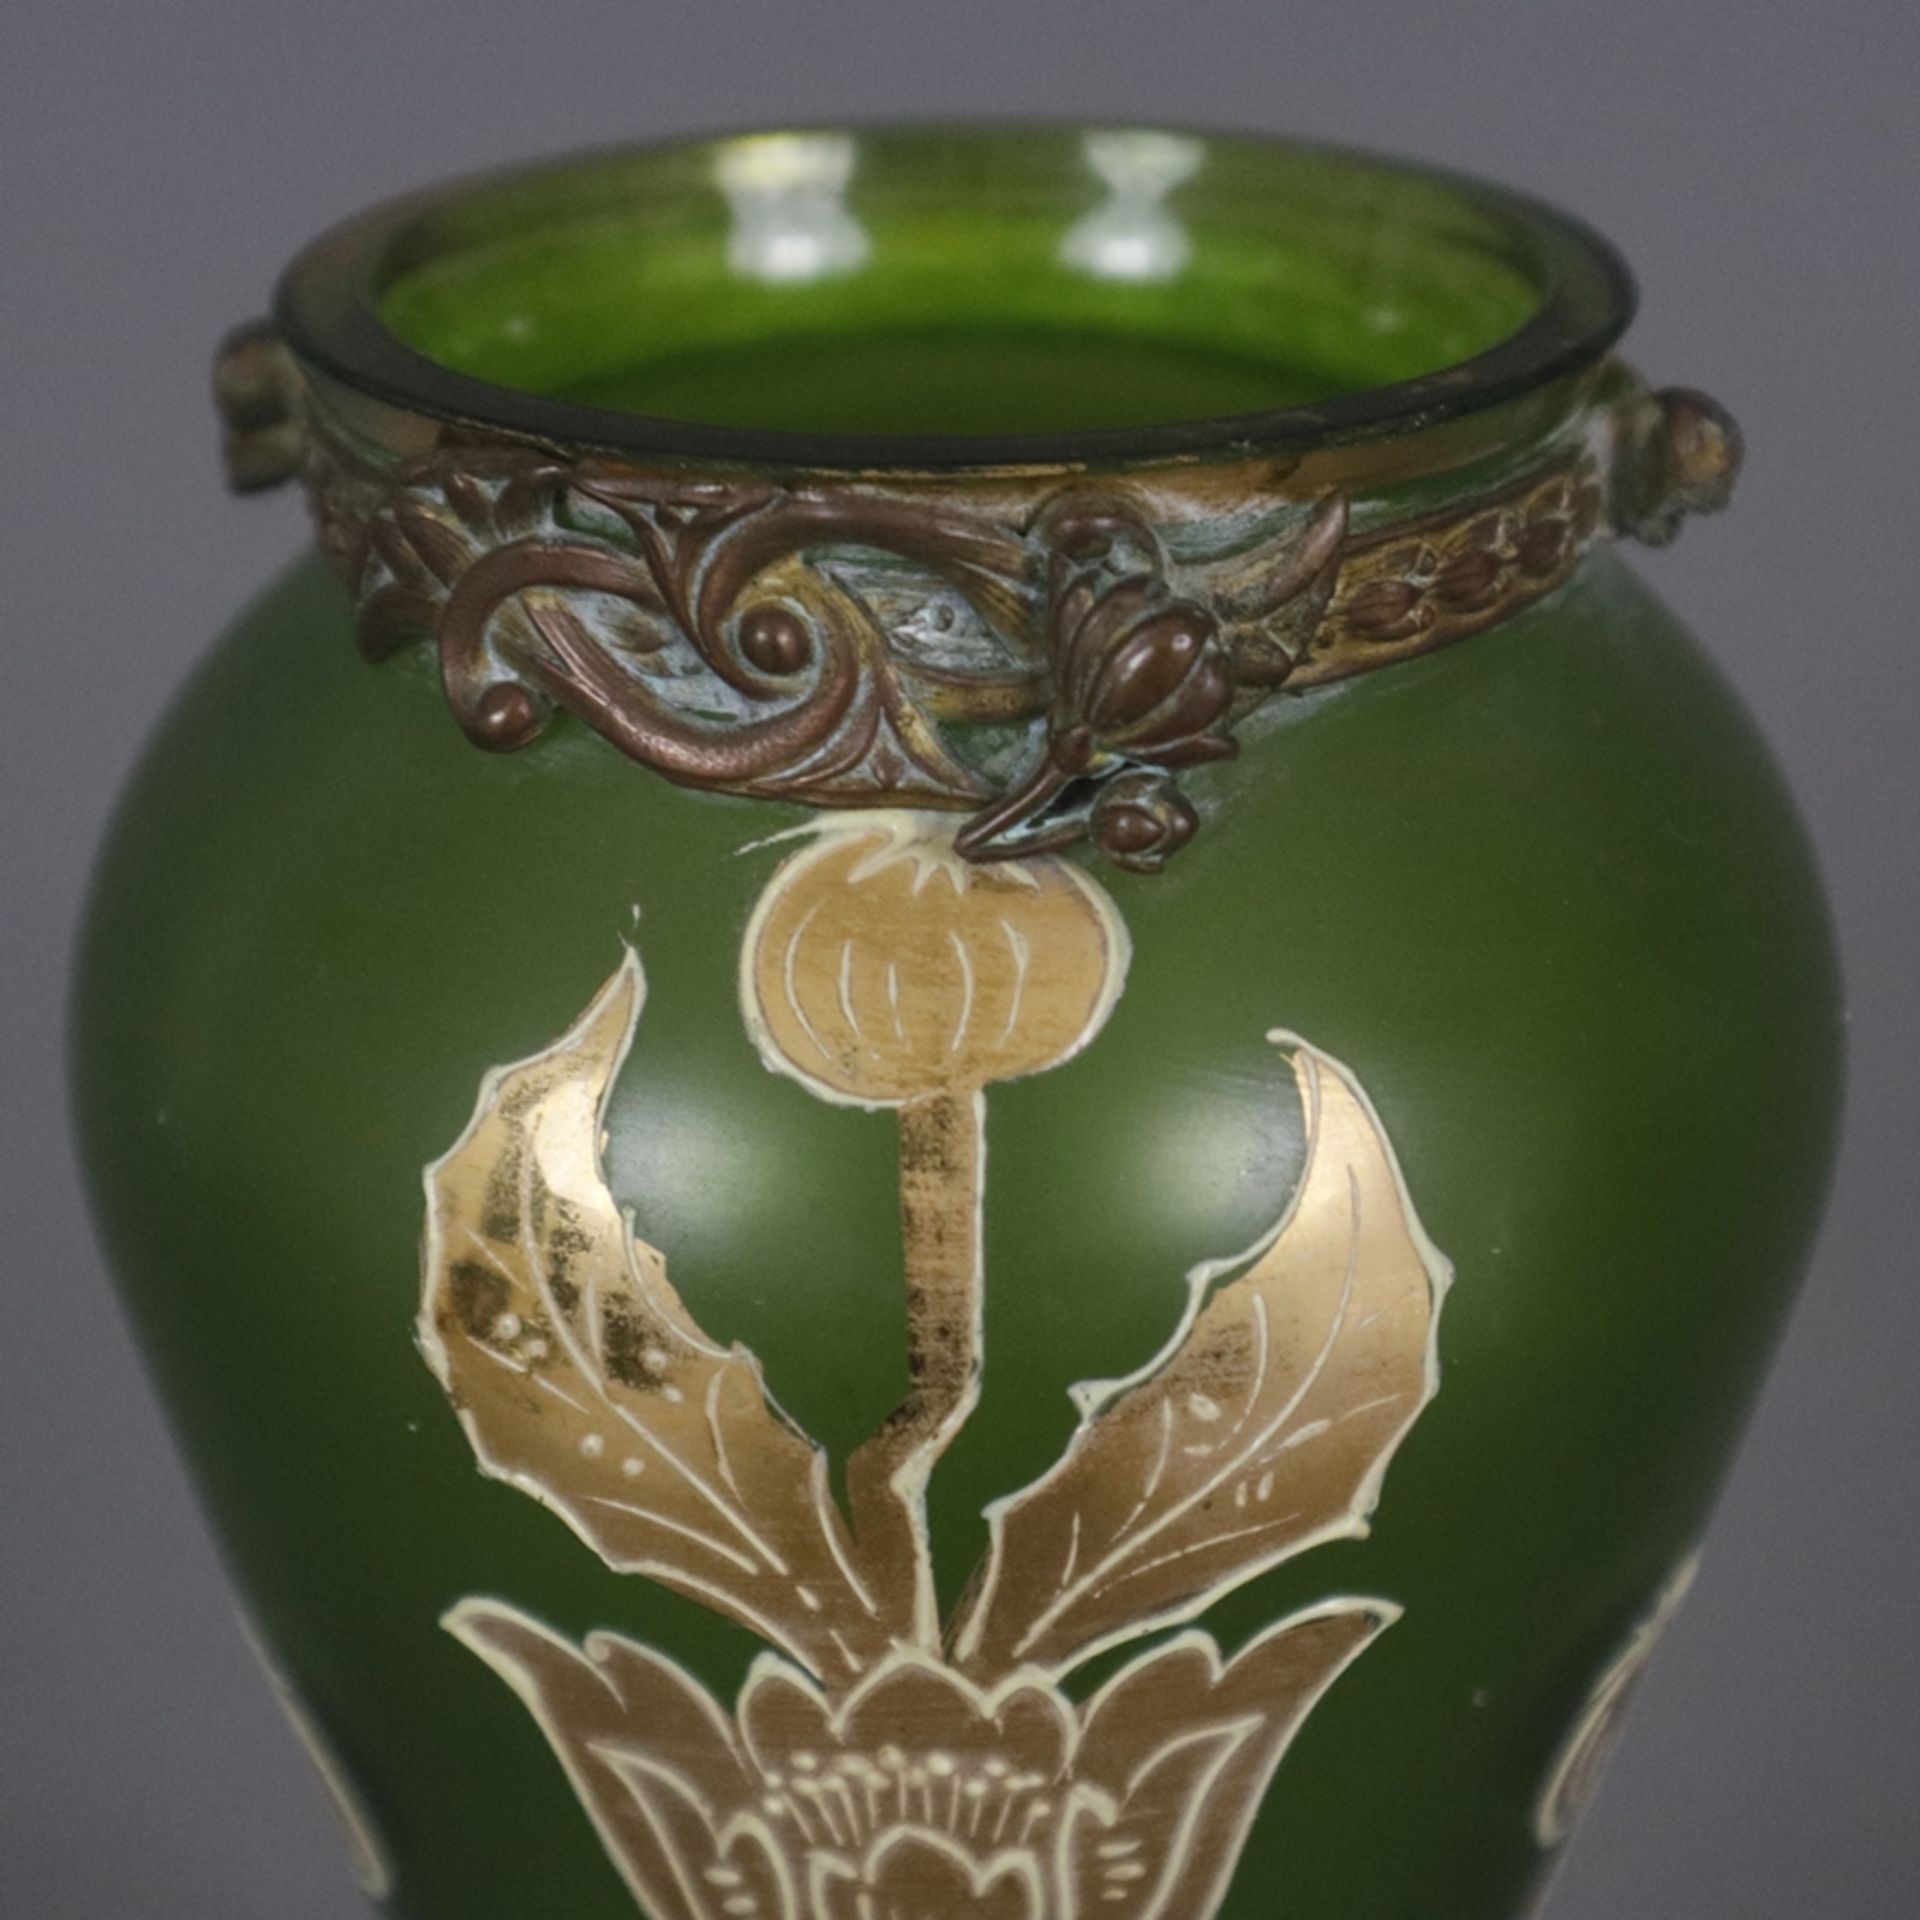 Jugendstil-Glasvase mit Metallmontur - wohl Frankreich um 1900, Klarglas mit grünem Unterfang, scha - Image 2 of 8